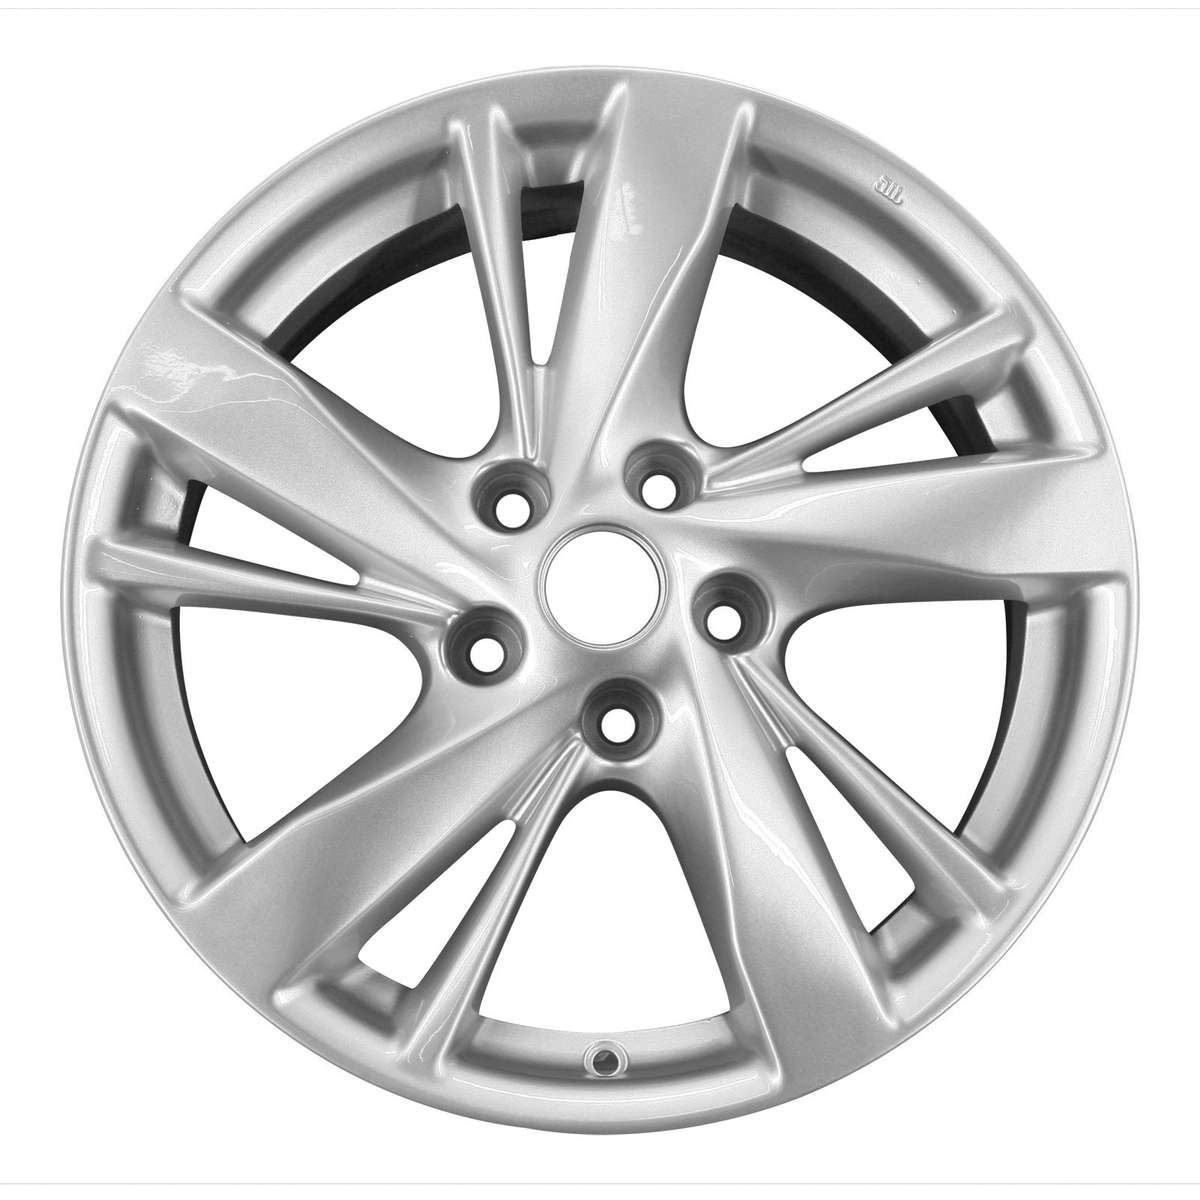 2015 Nissan Altima New 17" Replacement Wheel Rim RW62593S